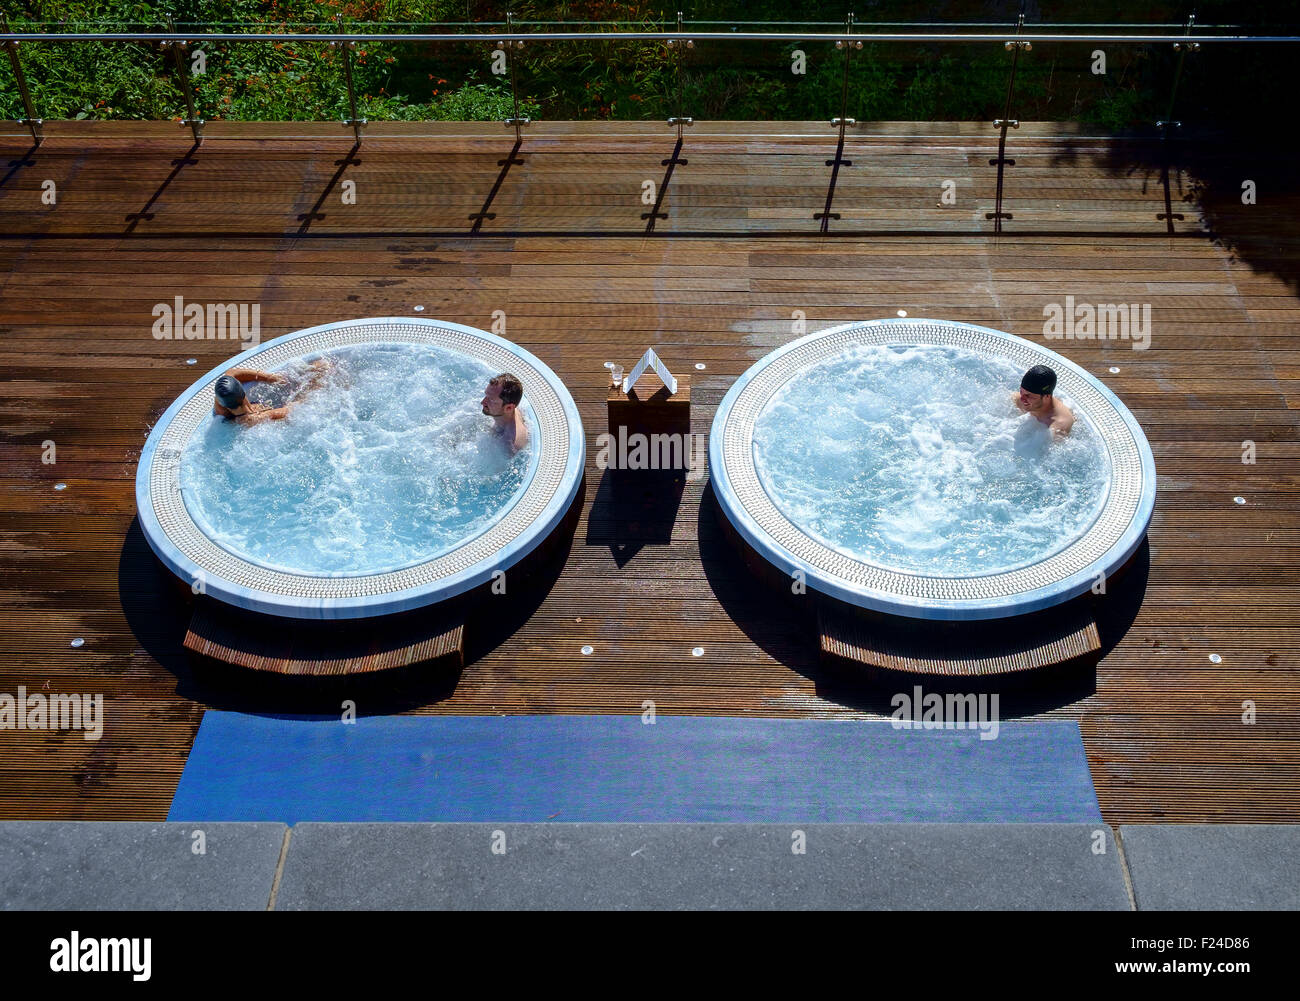 jacuzzi outdoor bathing bathers circular hot tub Stock Photo